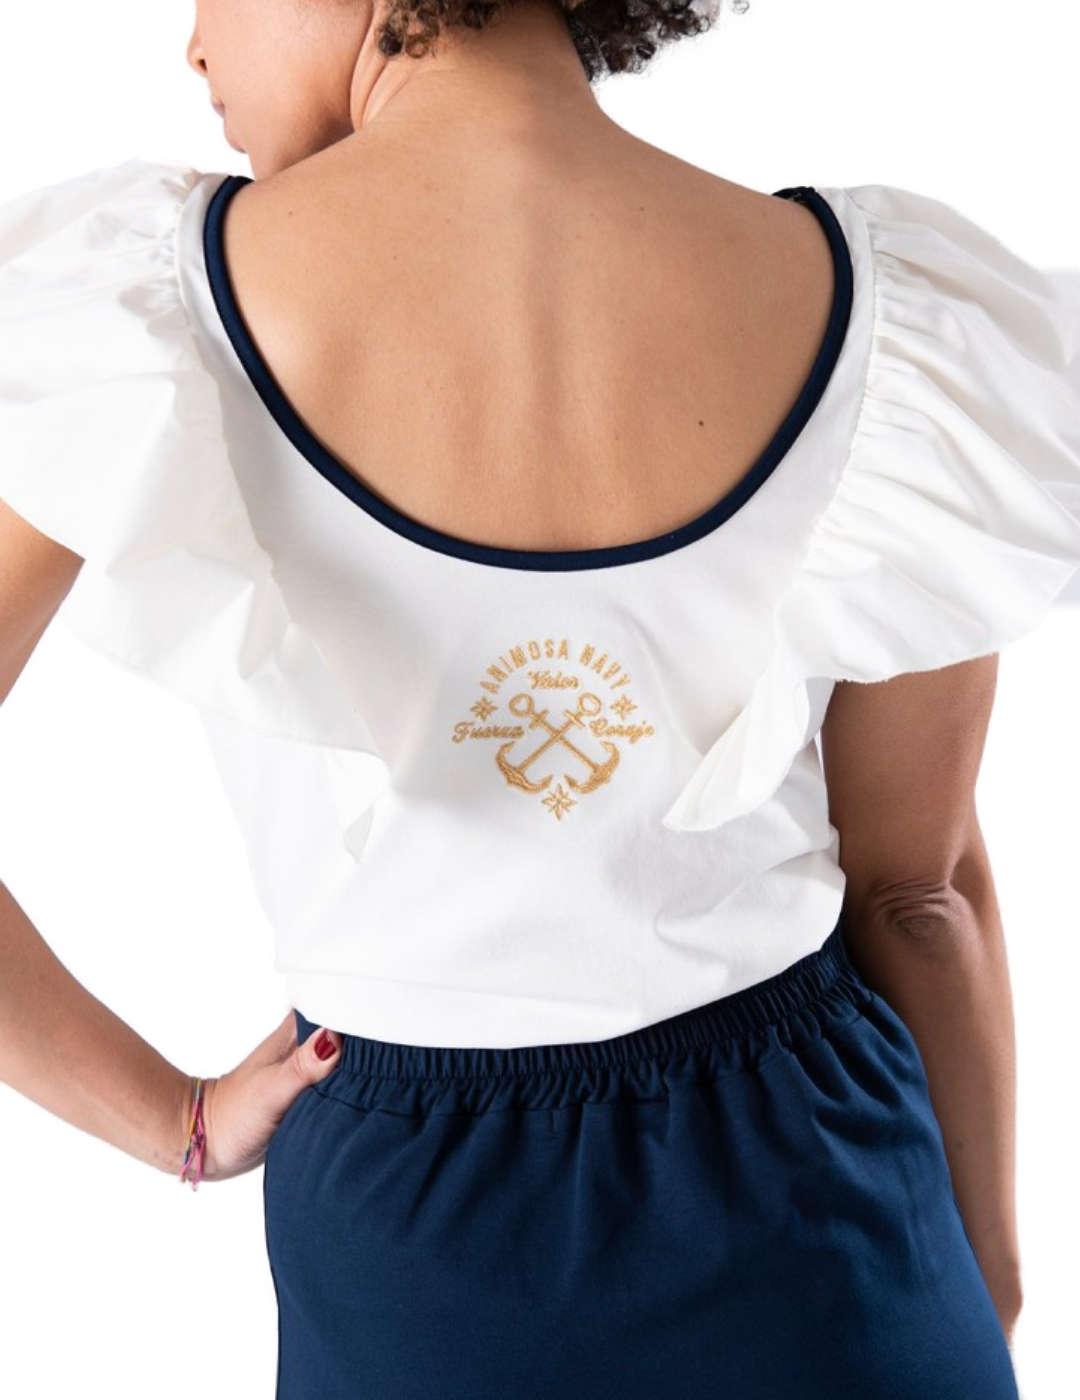 Camiseta Animosa Navy tirantes marinera para mujer